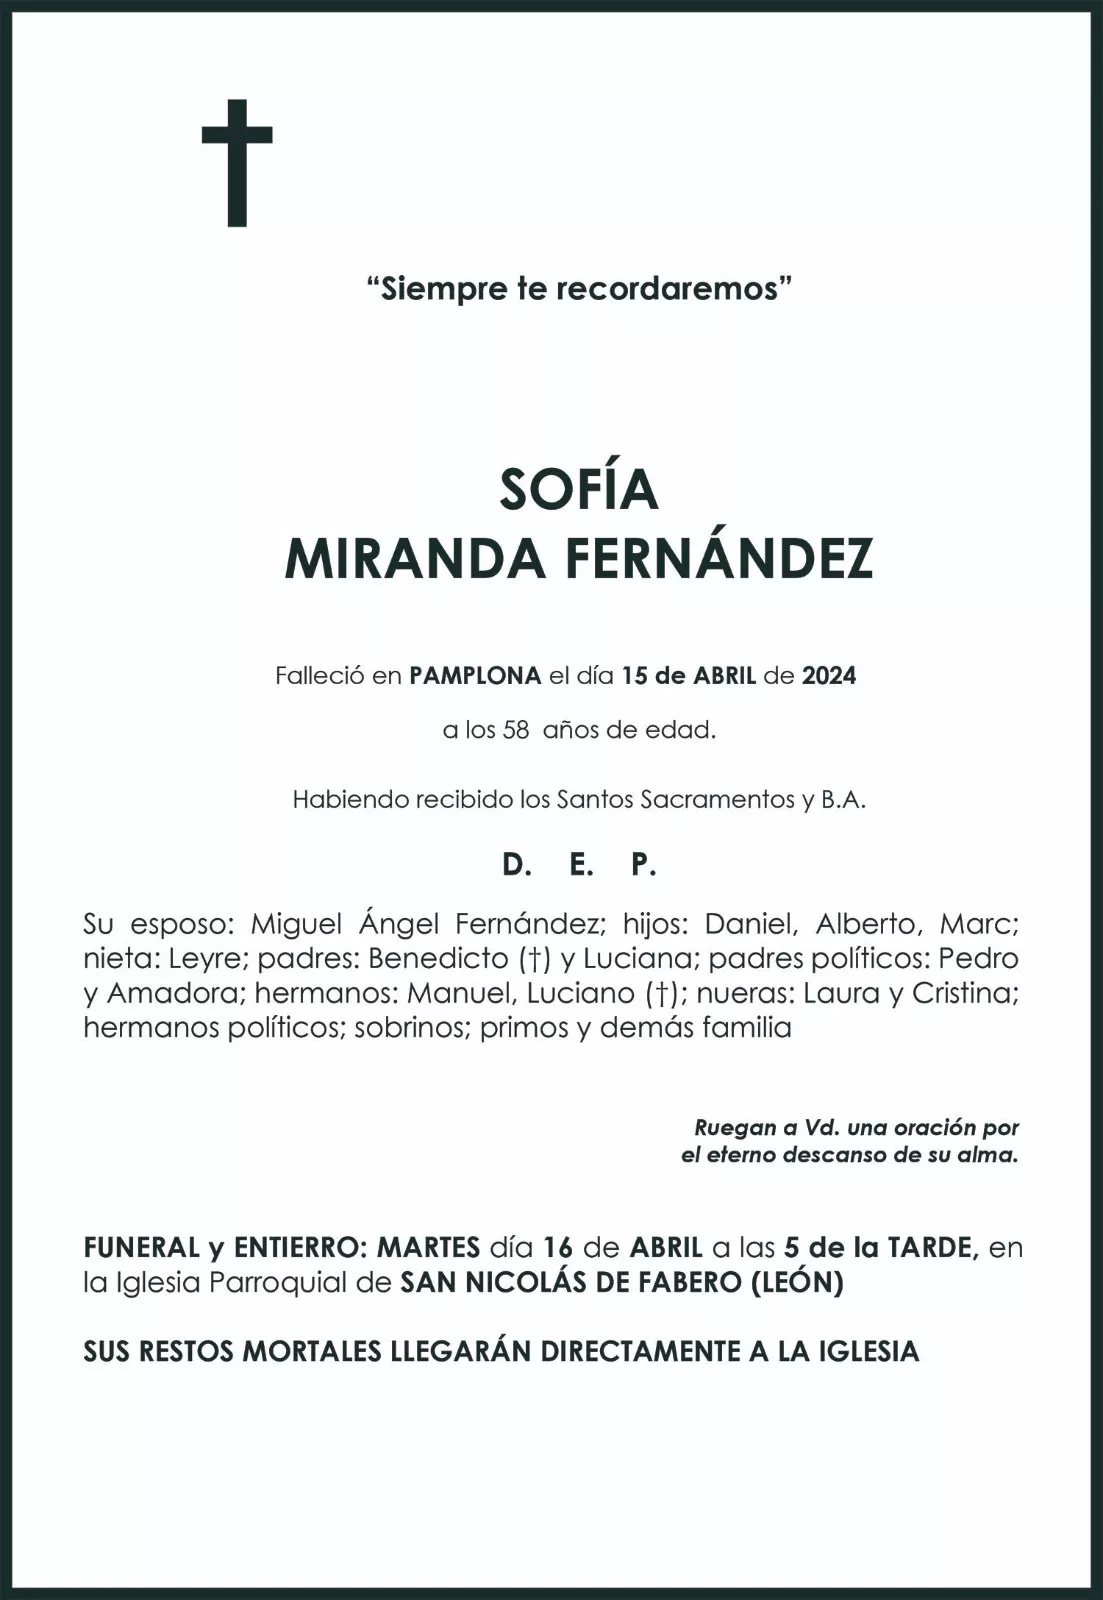 SOFIA MIRANDA FERNANDEZ